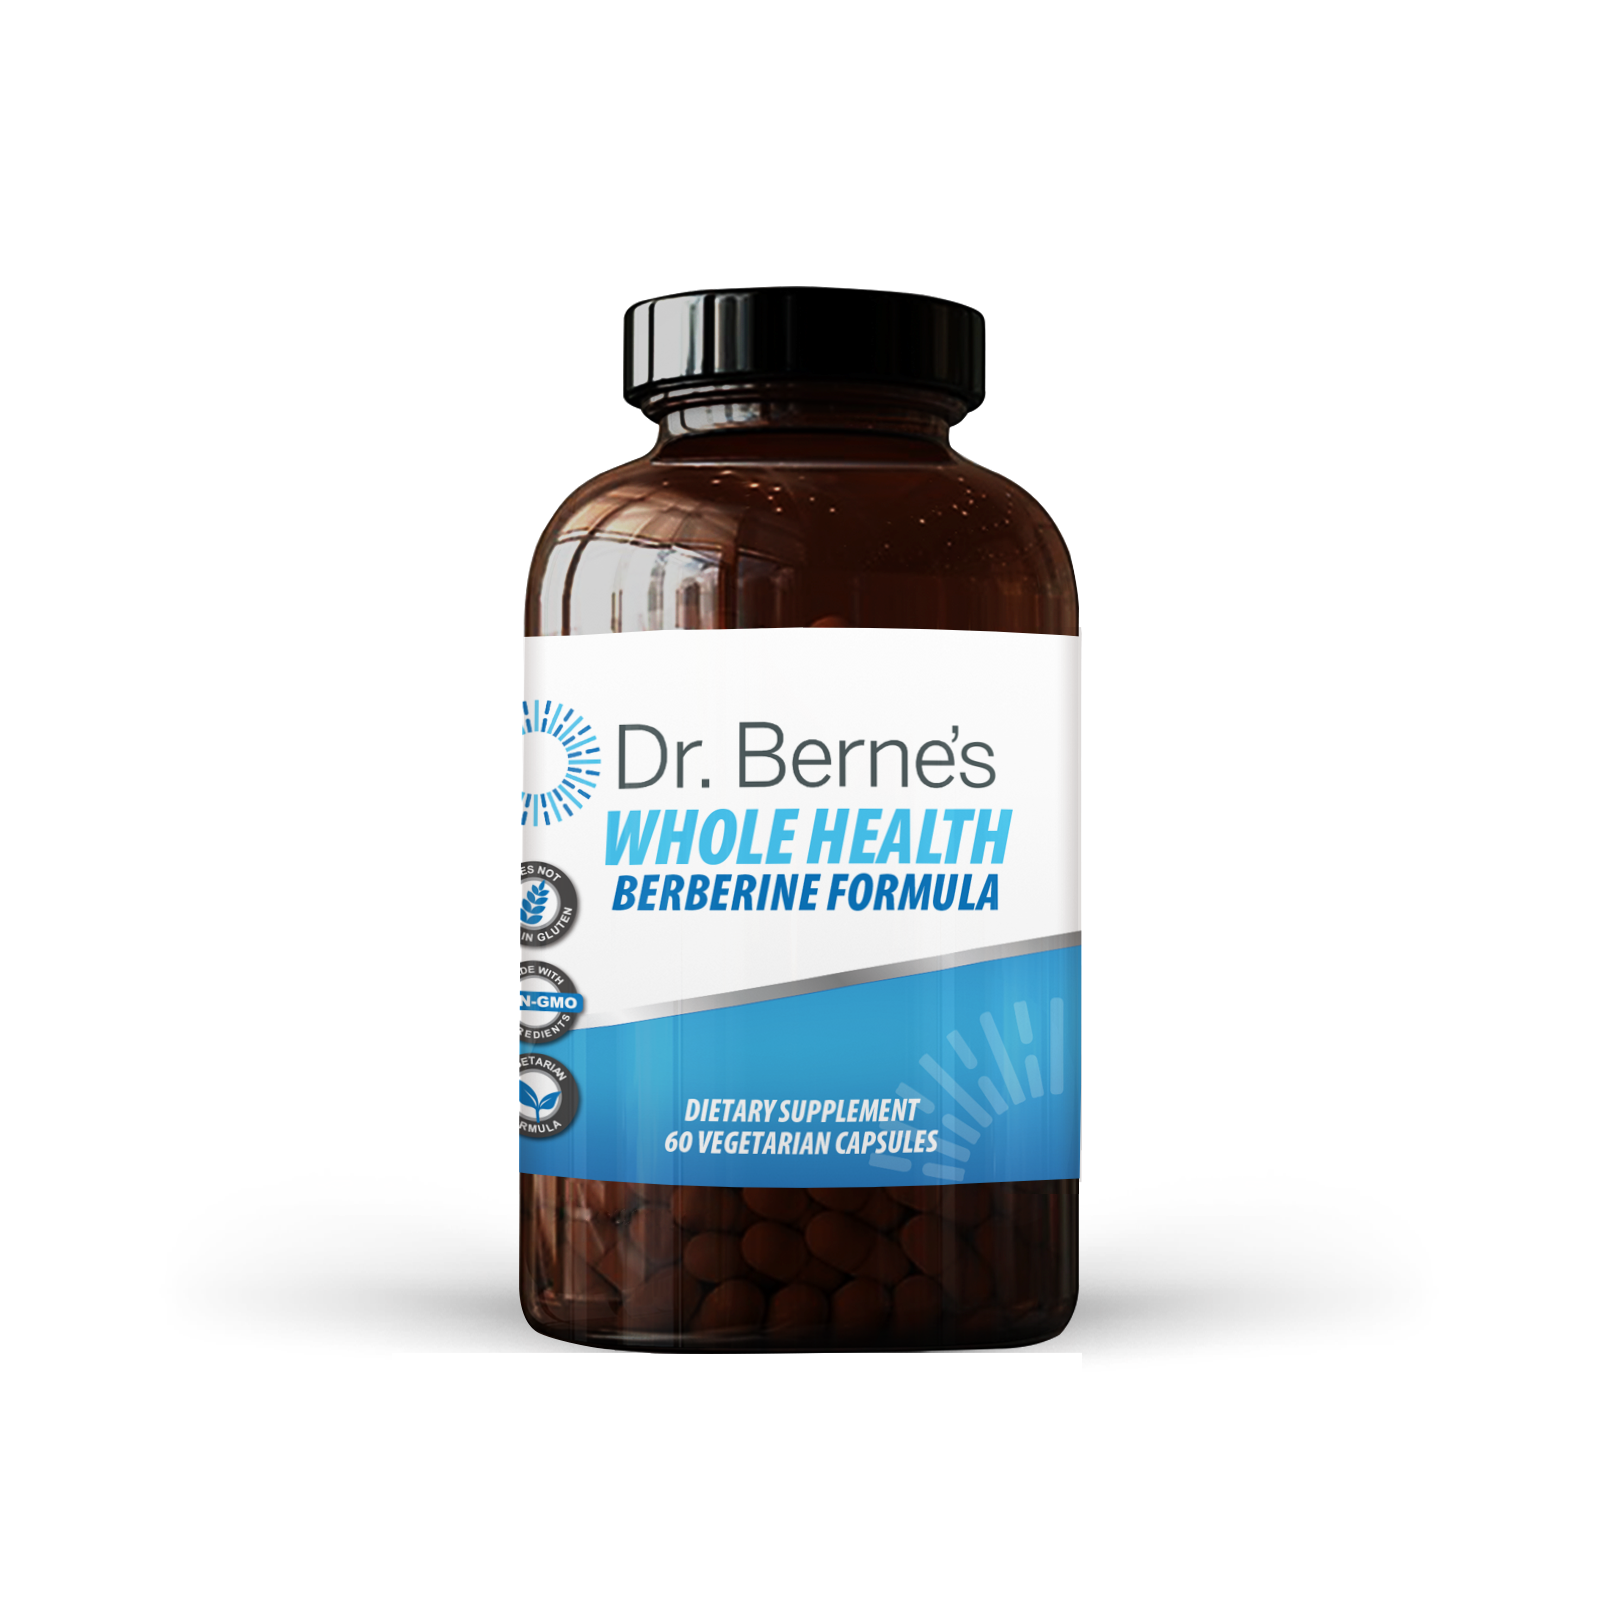 Dr. Berne's Whole Health Berberine Formula